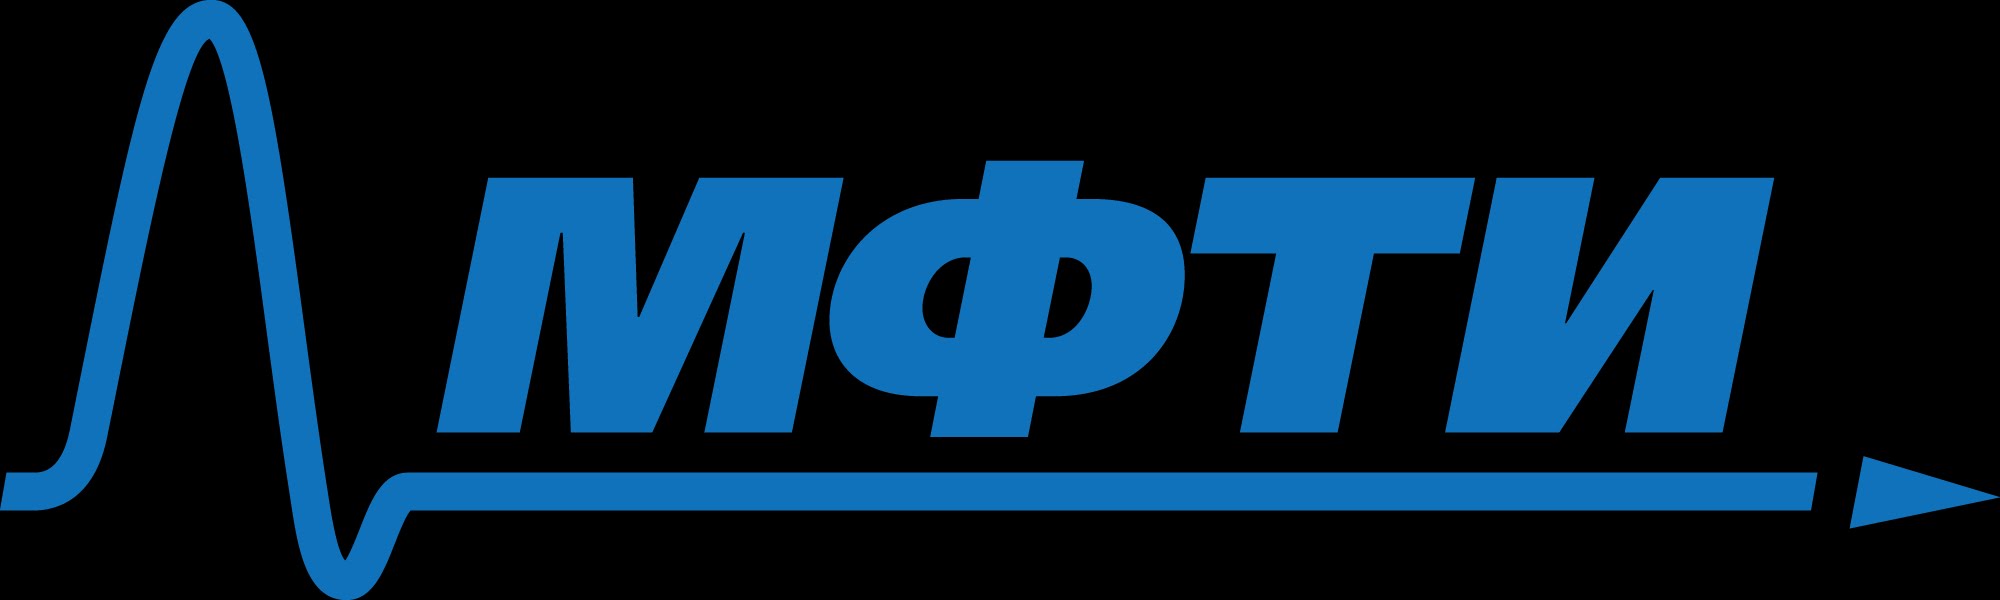 Мипт тех. Московский физико-технический институт лого. МФТИ лого. Логотип МФТИ институт.